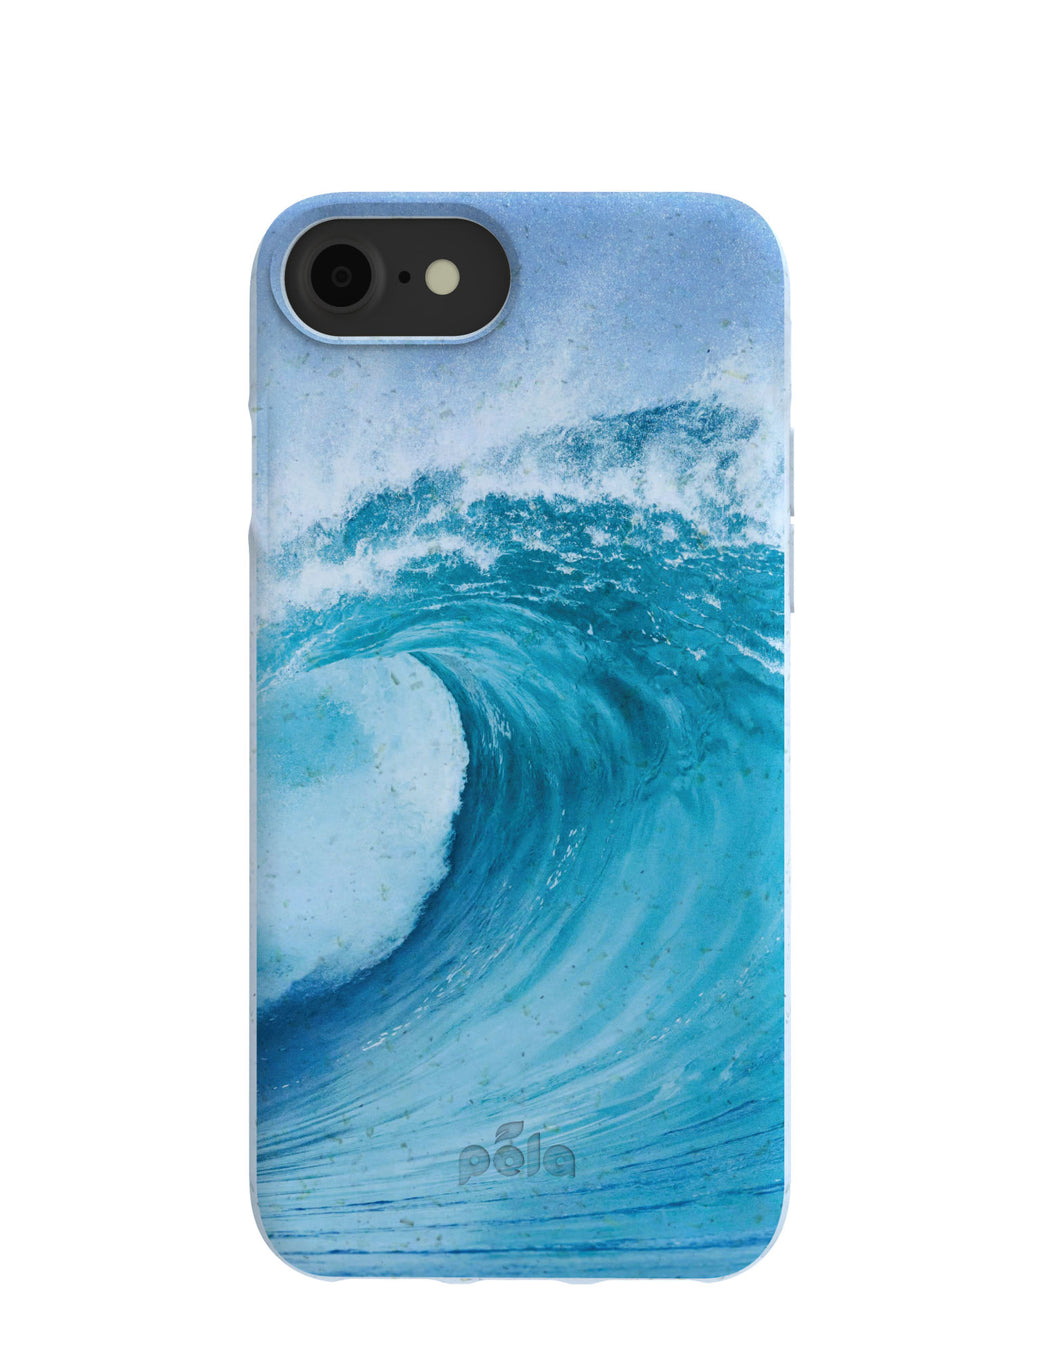 Powder Blue Big Wave iPhone 6/6s/7/8/SE Case